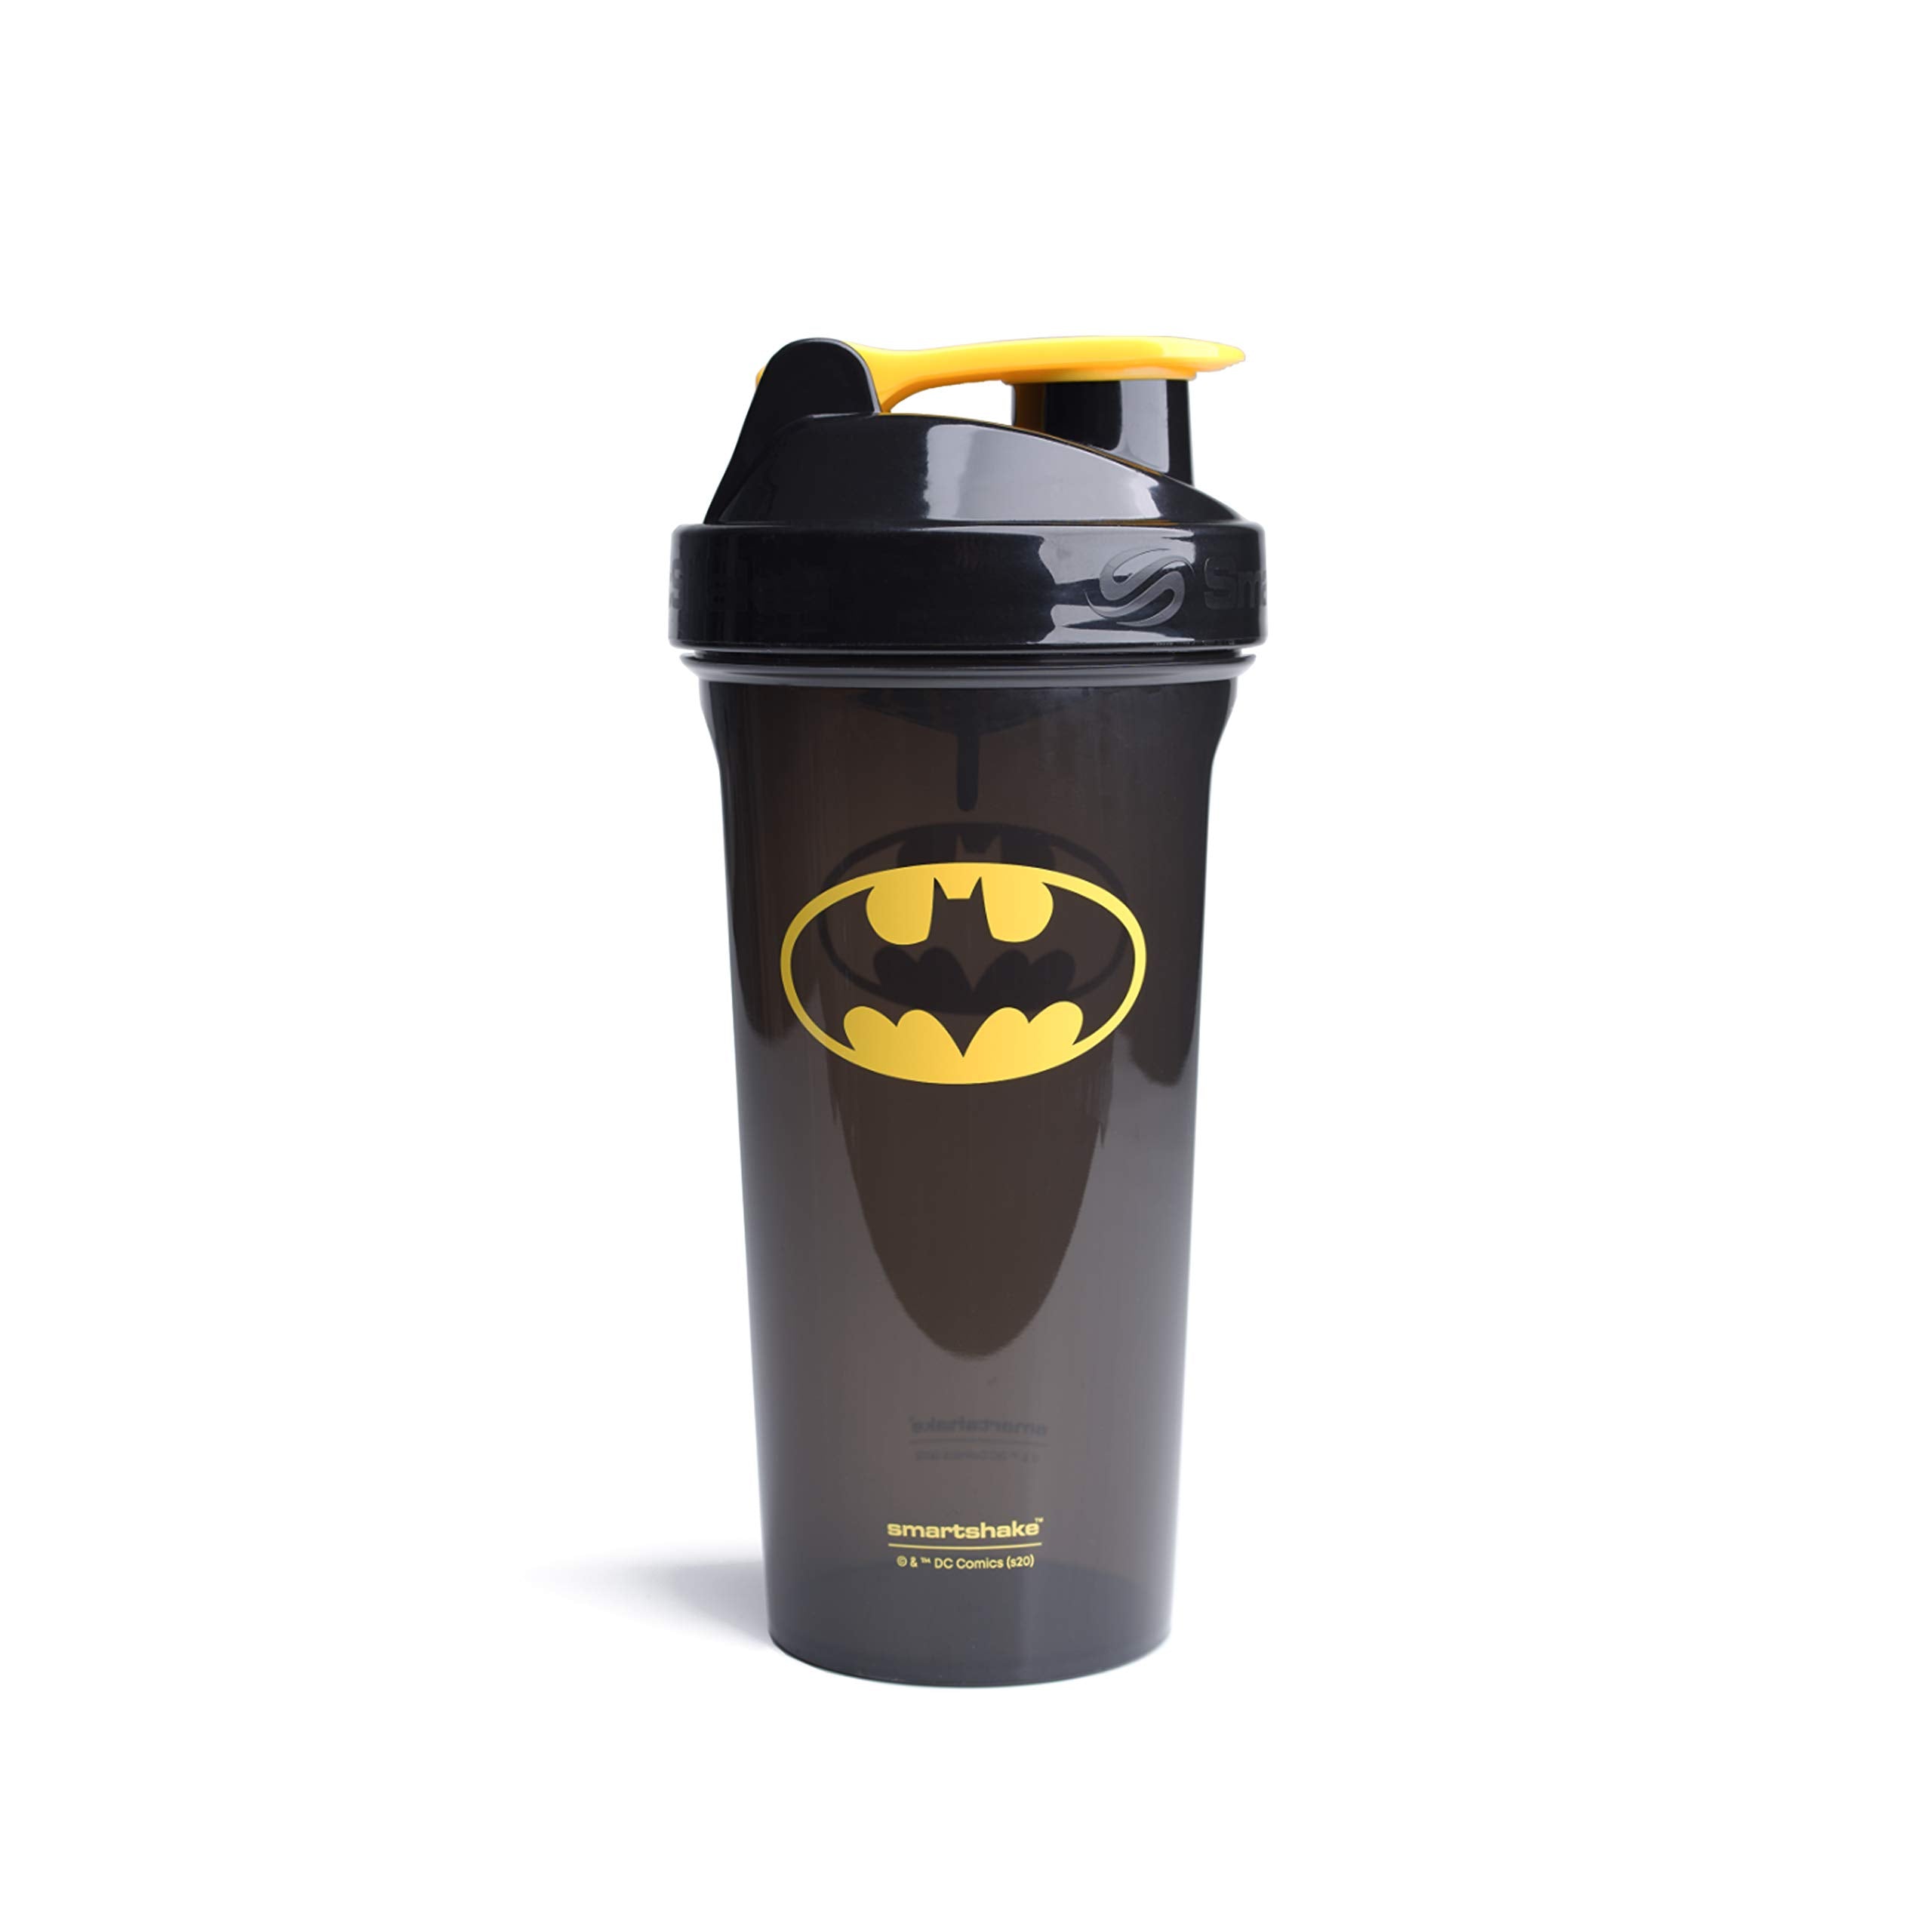 Smartshake Lite Justice League Protein Shaker Bottle 800ml – DC Comics Batman Water Bottle, Leakproof BPA Free Gym Shaker Bottle for Protein Shakes And Protein Powder, Batman Gifts for Men